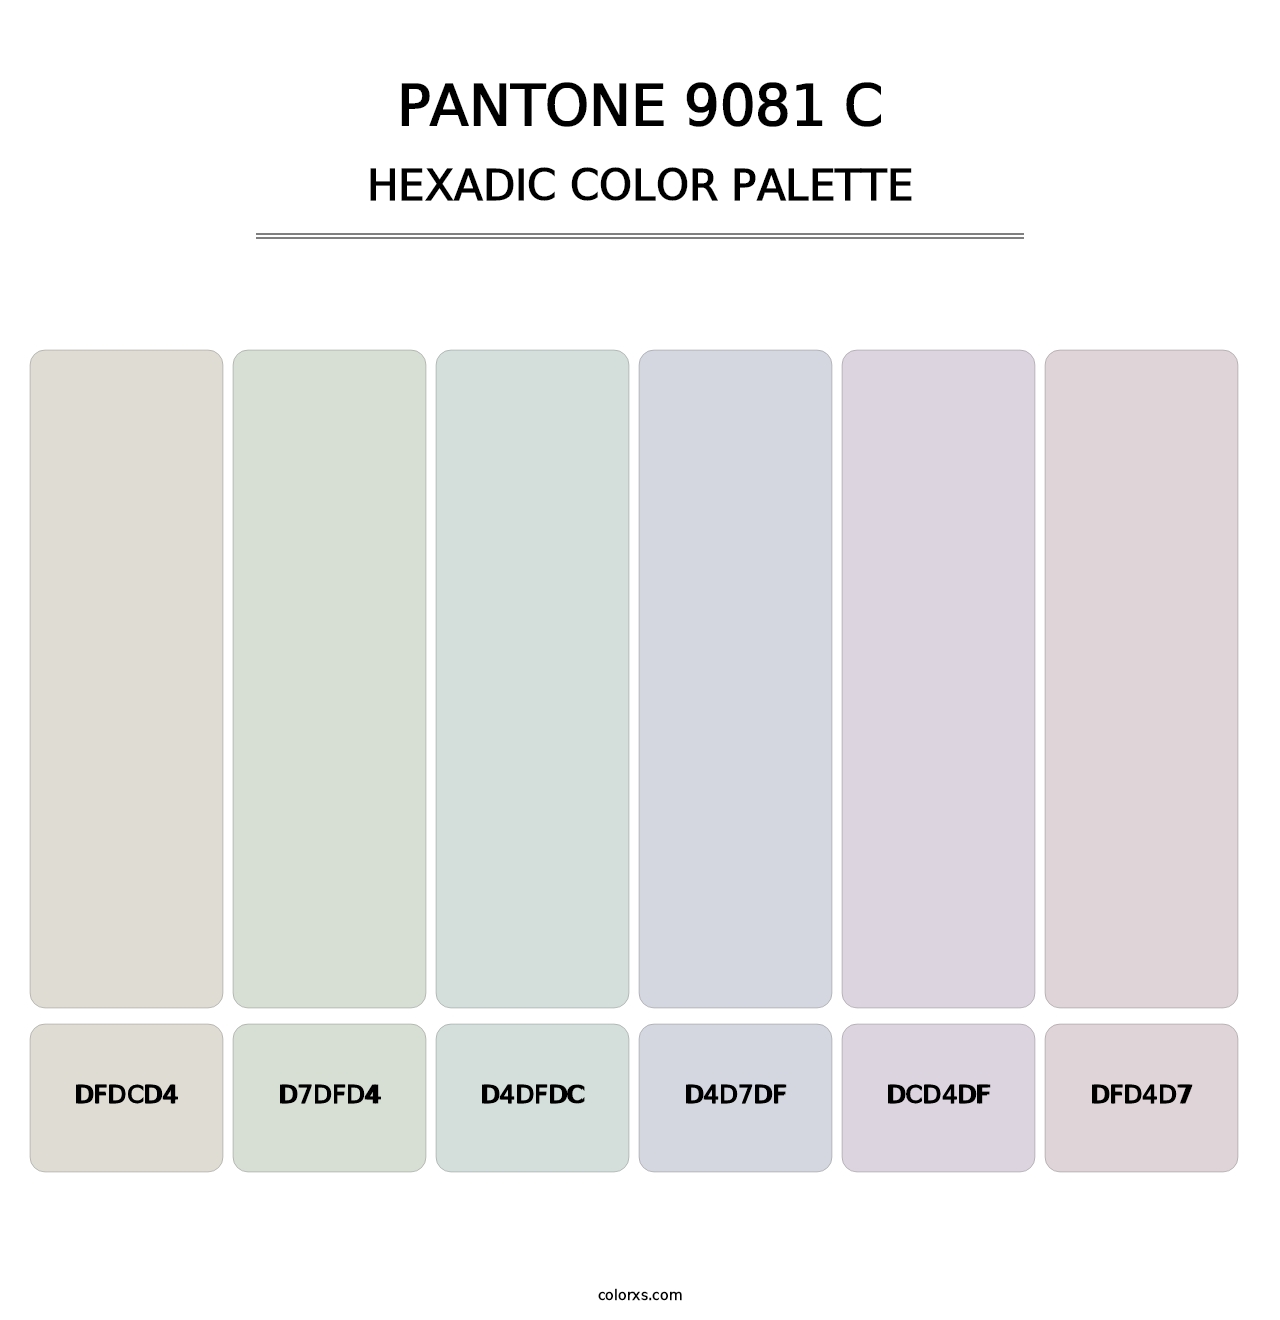 PANTONE 9081 C - Hexadic Color Palette